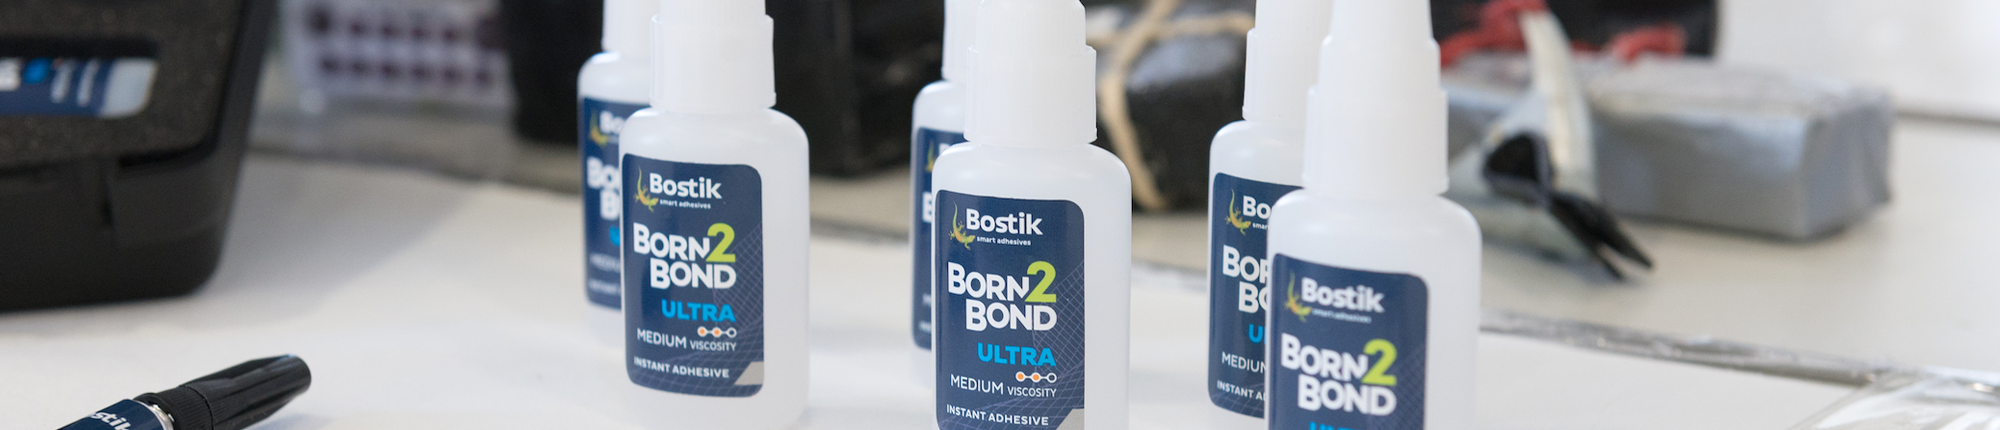 Bostik Born2Bond bottles